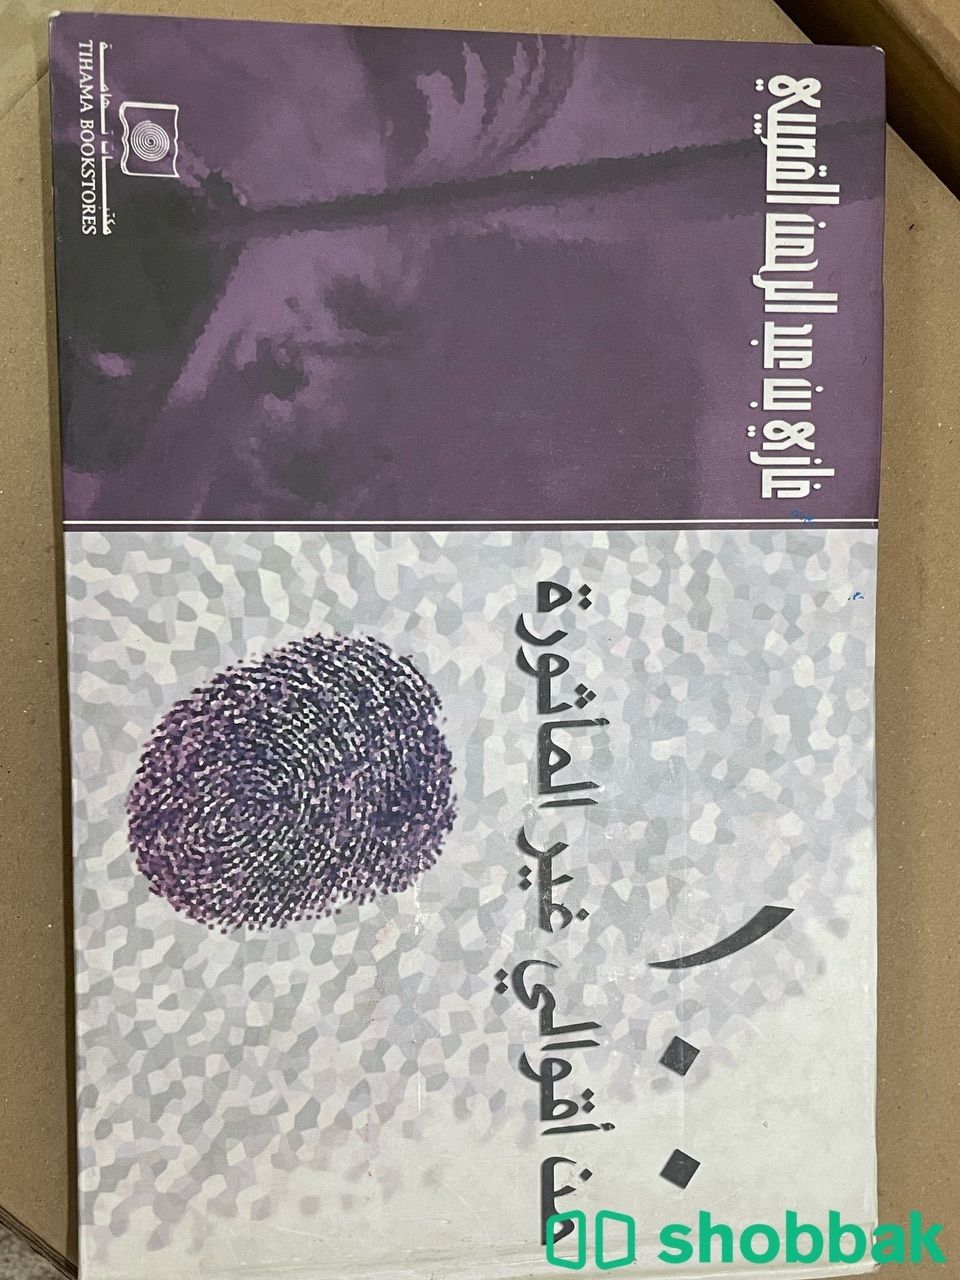 مجموعه كتب نظيفه مسعمله لكن جداً ممتازه  Shobbak Saudi Arabia